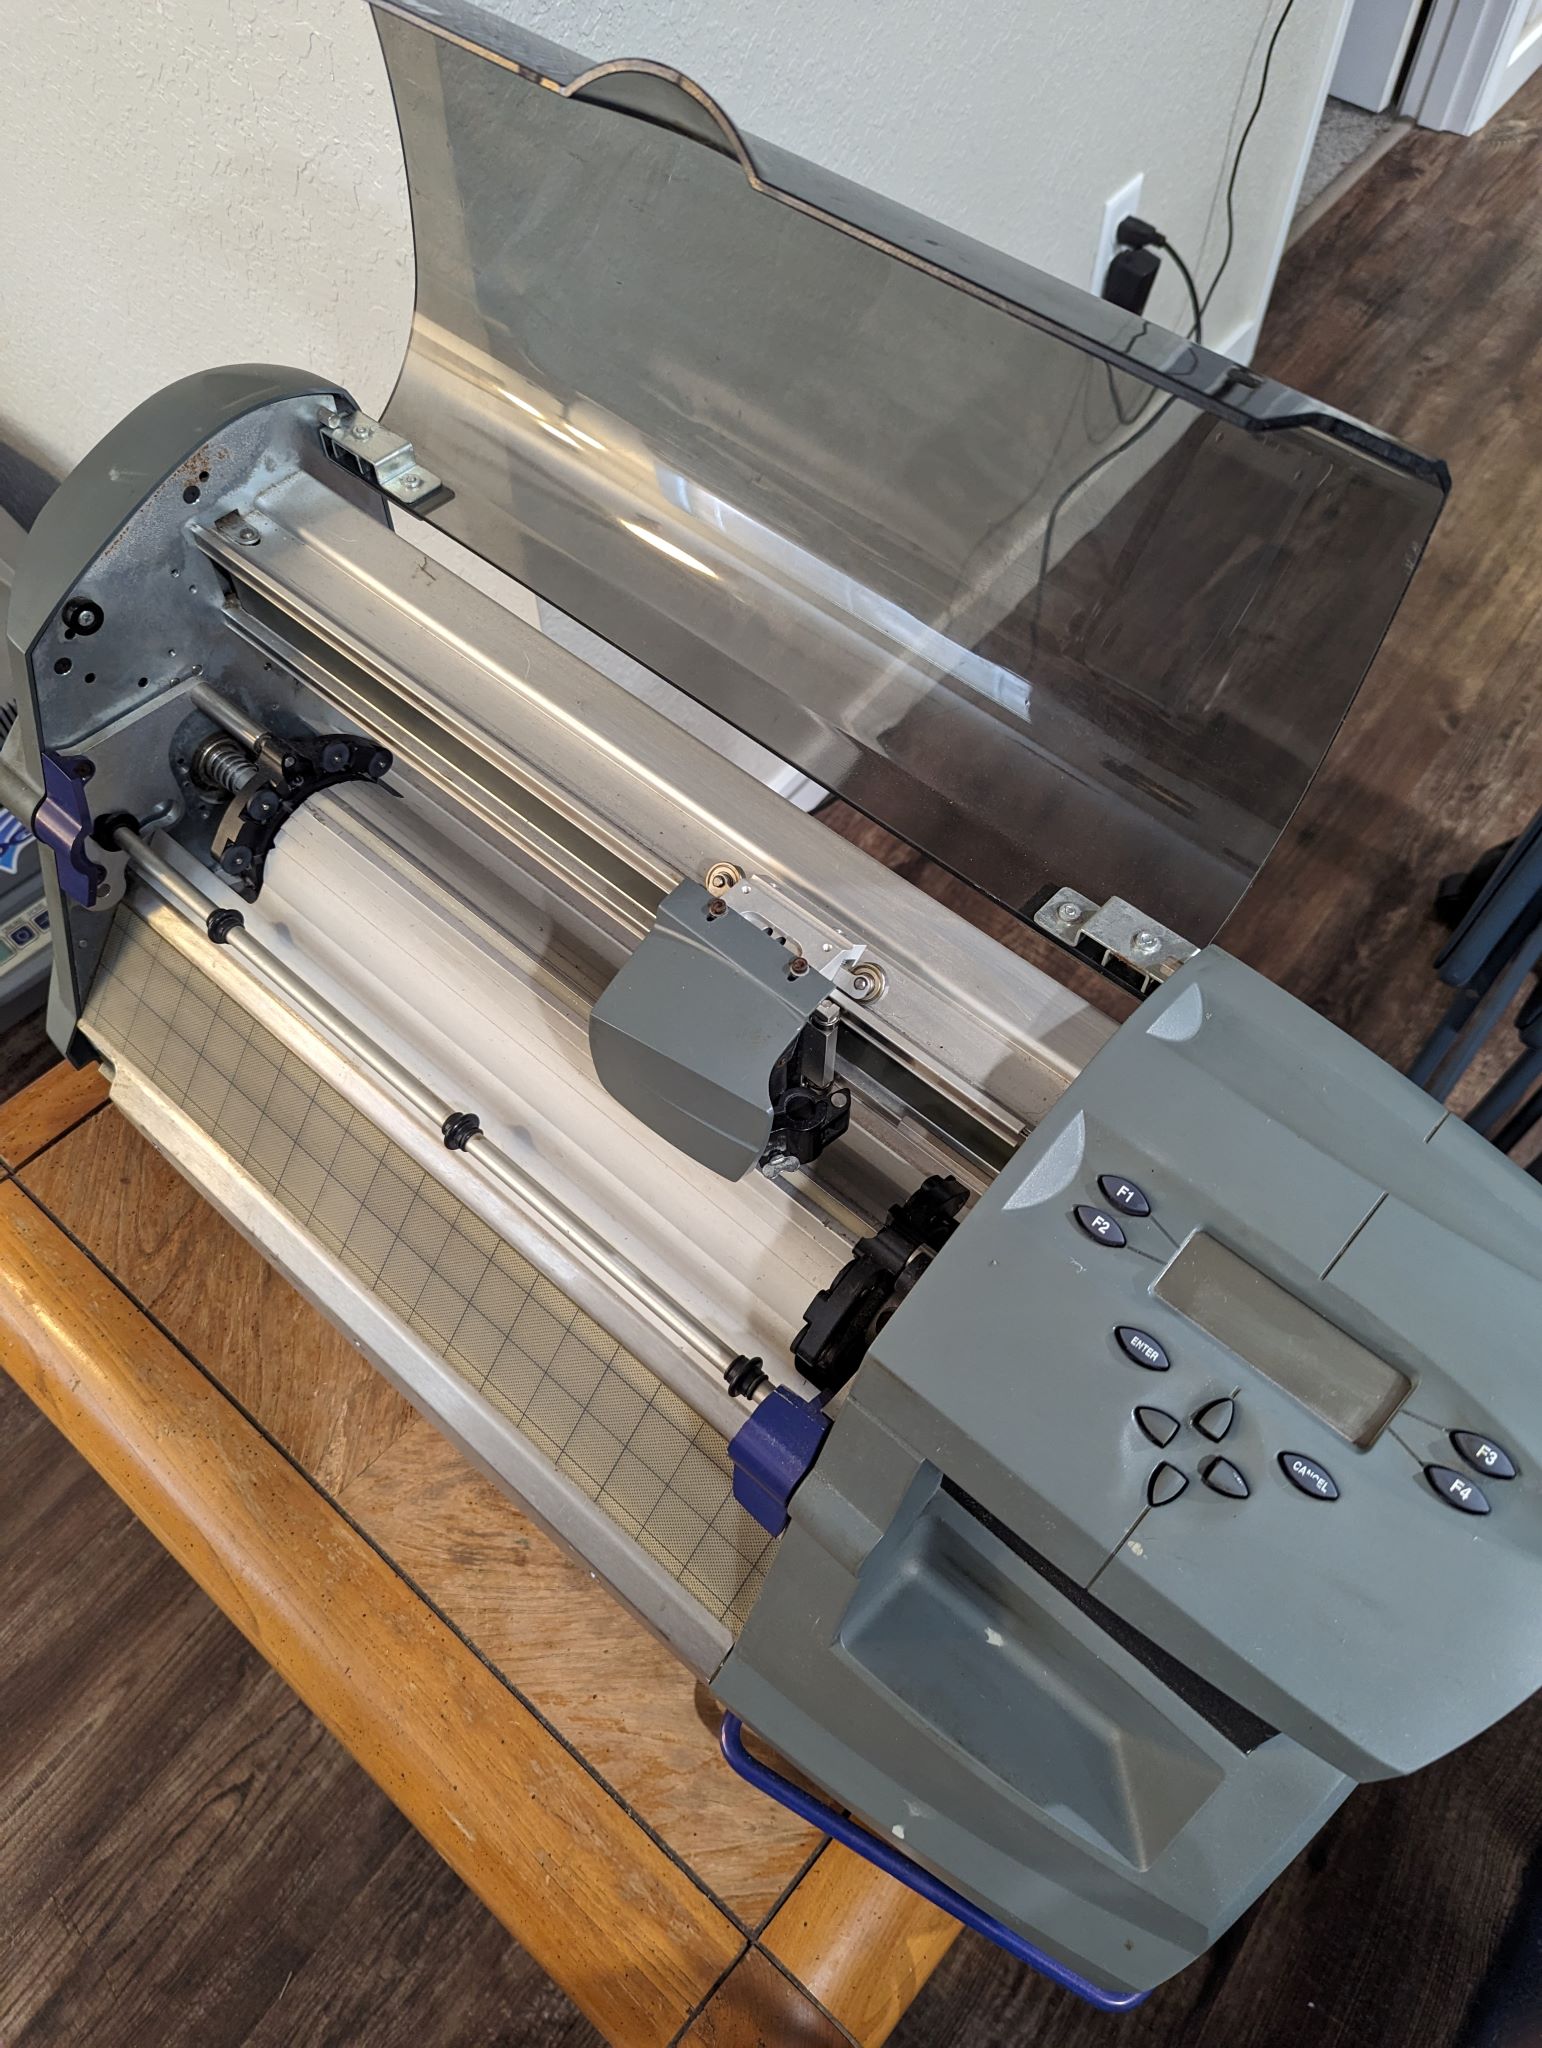 Equipment Lot: Gerber Graphic Edge 2 Thermal Printer, EnVision 375 Plotter, & Assorted Gerber Supplies: Foils, Vinyl & Misc. (Used) Item # UE-101723F